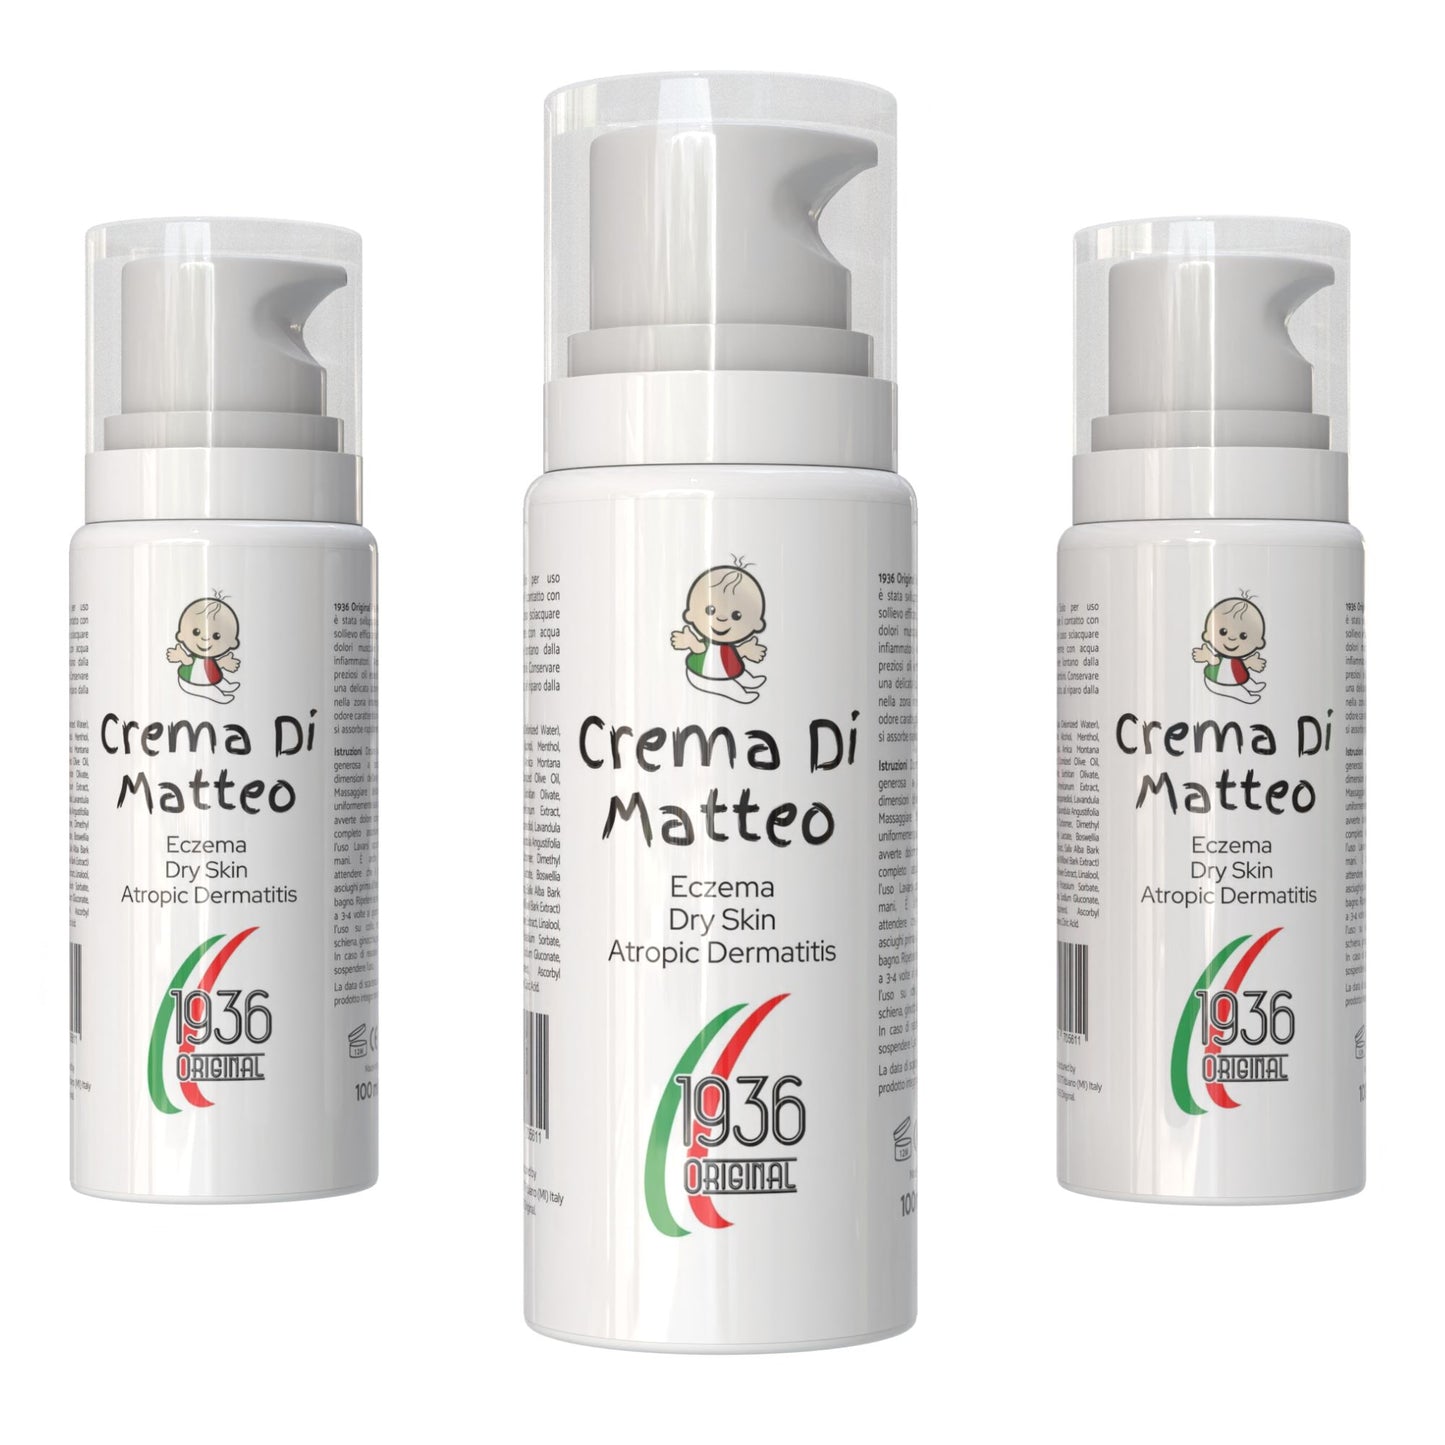 Crema Di Matteo - Eczema, Dry Skin and Atopic Dermatitis Treatment